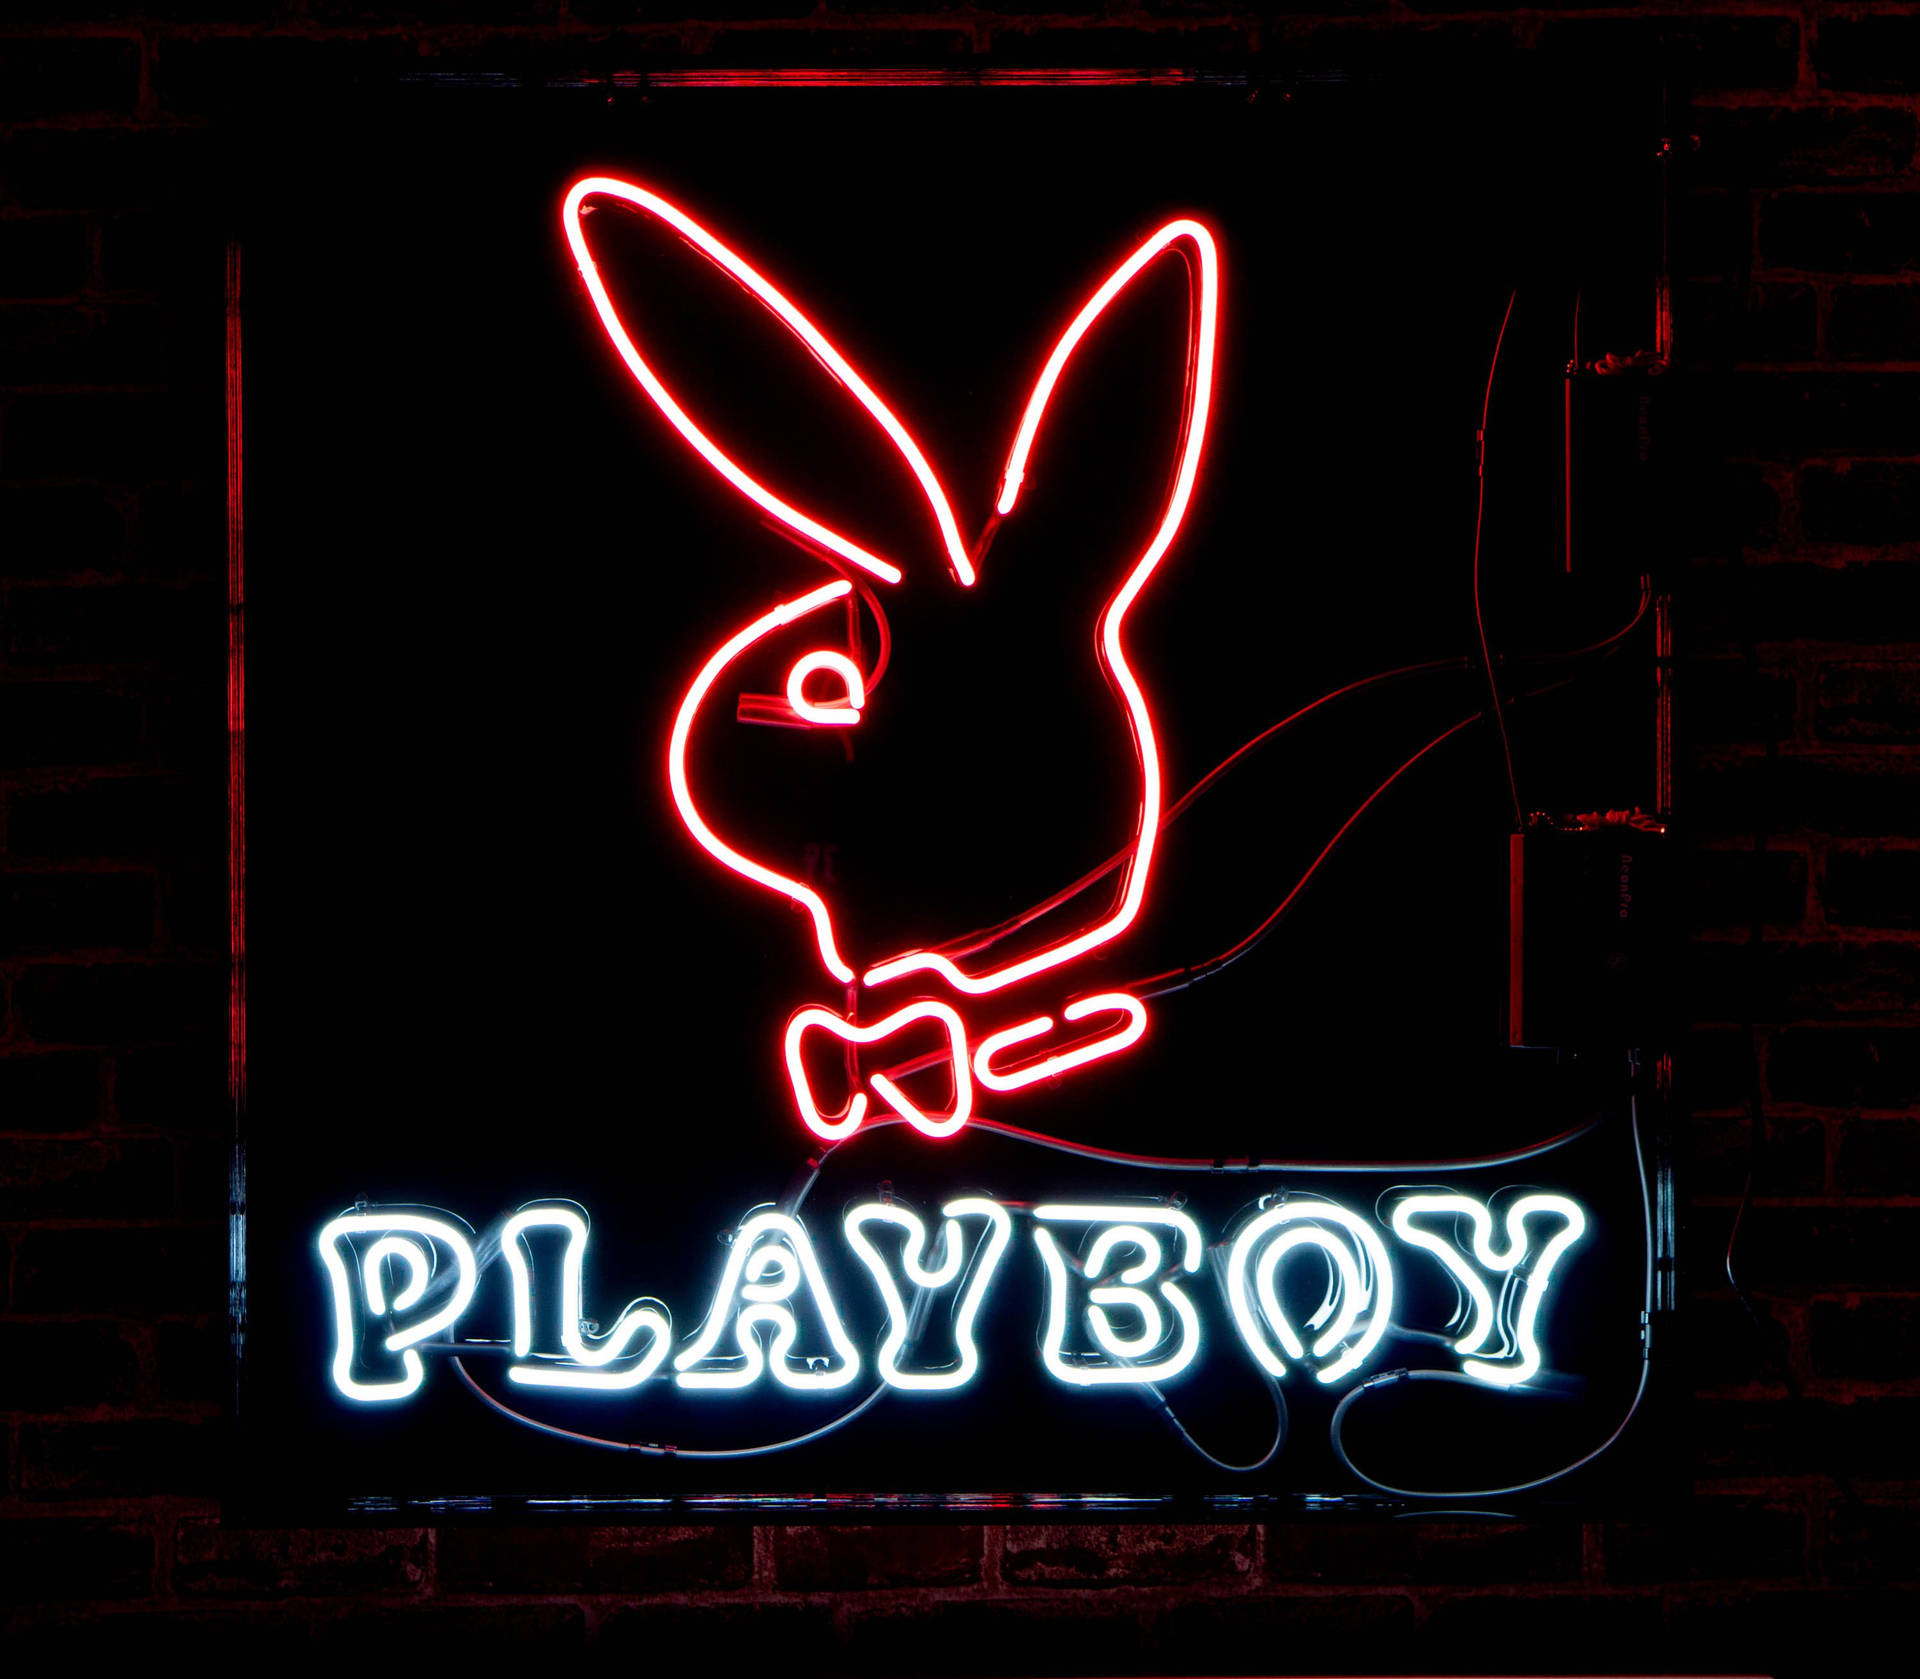 Playboy Logo Wallpaper